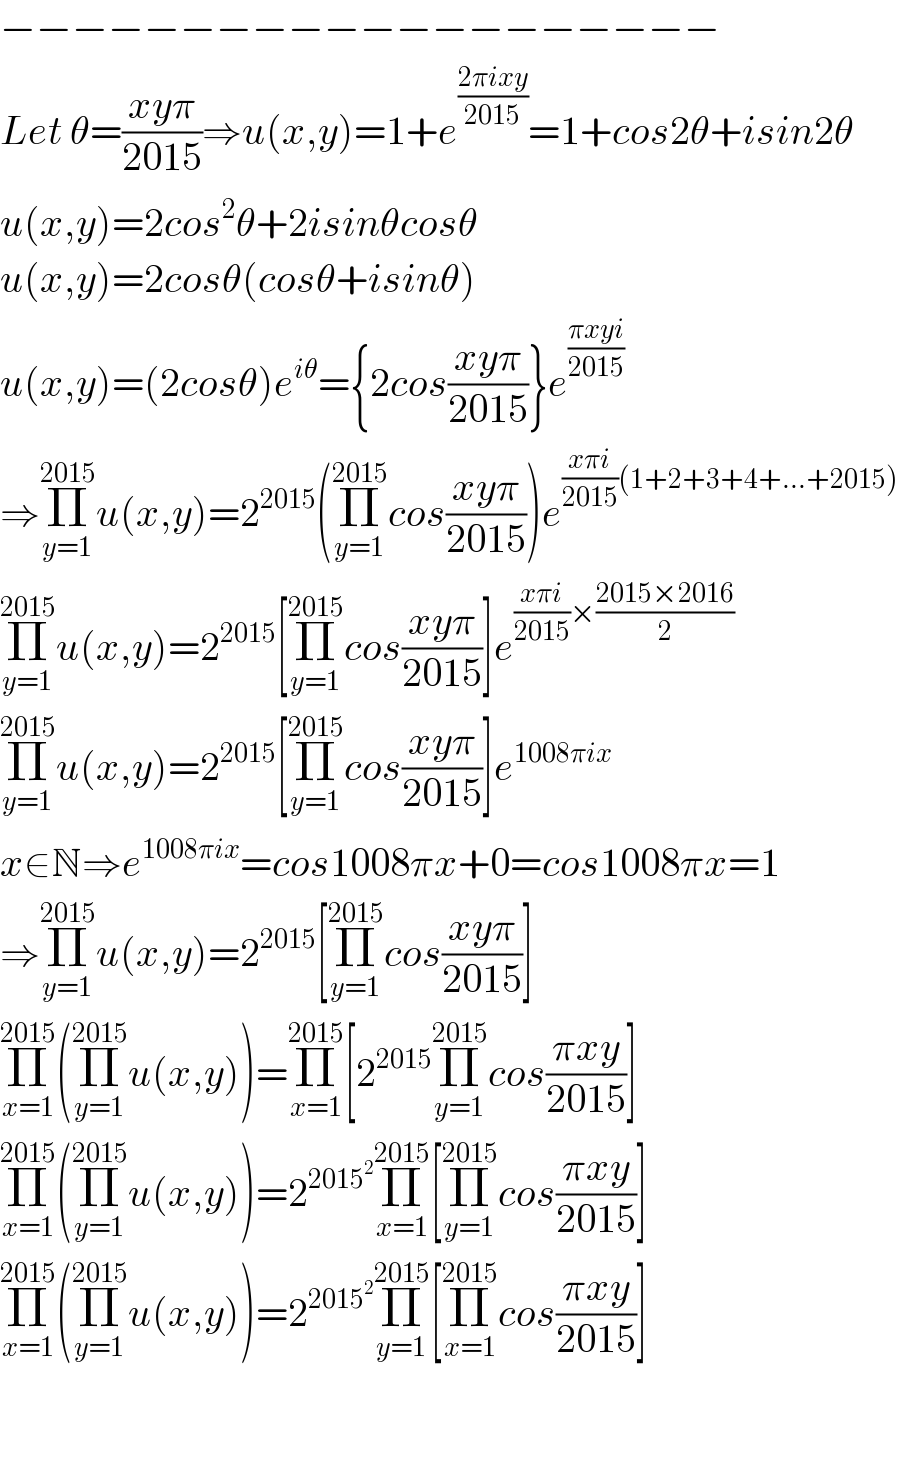 −−−−−−−−−−−−−−−−−−−−  Let θ=((xyπ)/(2015))⇒u(x,y)=1+e^((2πixy)/(2015)) =1+cos2θ+isin2θ  u(x,y)=2cos^2 θ+2isinθcosθ  u(x,y)=2cosθ(cosθ+isinθ)  u(x,y)=(2cosθ)e^(iθ) ={2cos((xyπ)/(2015))}e^((πxyi)/(2015))    ⇒Π_(y=1) ^(2015) u(x,y)=2^(2015) (Π_(y=1) ^(2015) cos((xyπ)/(2015)))e^(((xπi)/(2015))(1+2+3+4+...+2015))   Π_(y=1) ^(2015) u(x,y)=2^(2015) [Π_(y=1) ^(2015) cos((xyπ)/(2015))]e^(((xπi)/(2015))×((2015×2016)/2))   Π_(y=1) ^(2015) u(x,y)=2^(2015) [Π_(y=1) ^(2015) cos((xyπ)/(2015))]e^(1008πix)   x∈N⇒e^(1008πix) =cos1008πx+0=cos1008πx=1  ⇒Π_(y=1) ^(2015) u(x,y)=2^(2015) [Π_(y=1) ^(2015) cos((xyπ)/(2015))]  Π_(x=1) ^(2015) (Π_(y=1) ^(2015) u(x,y))=Π_(x=1) ^(2015) [2^(2015) Π_(y=1) ^(2015) cos((πxy)/(2015))]  Π_(x=1) ^(2015) (Π_(y=1) ^(2015) u(x,y))=2^(2015^2 ) Π_(x=1) ^(2015) [Π_(y=1) ^(2015) cos((πxy)/(2015))]  Π_(x=1) ^(2015) (Π_(y=1) ^(2015) u(x,y))=2^(2015^2 ) Π_(y=1) ^(2015) [Π_(x=1) ^(2015) cos((πxy)/(2015))]      